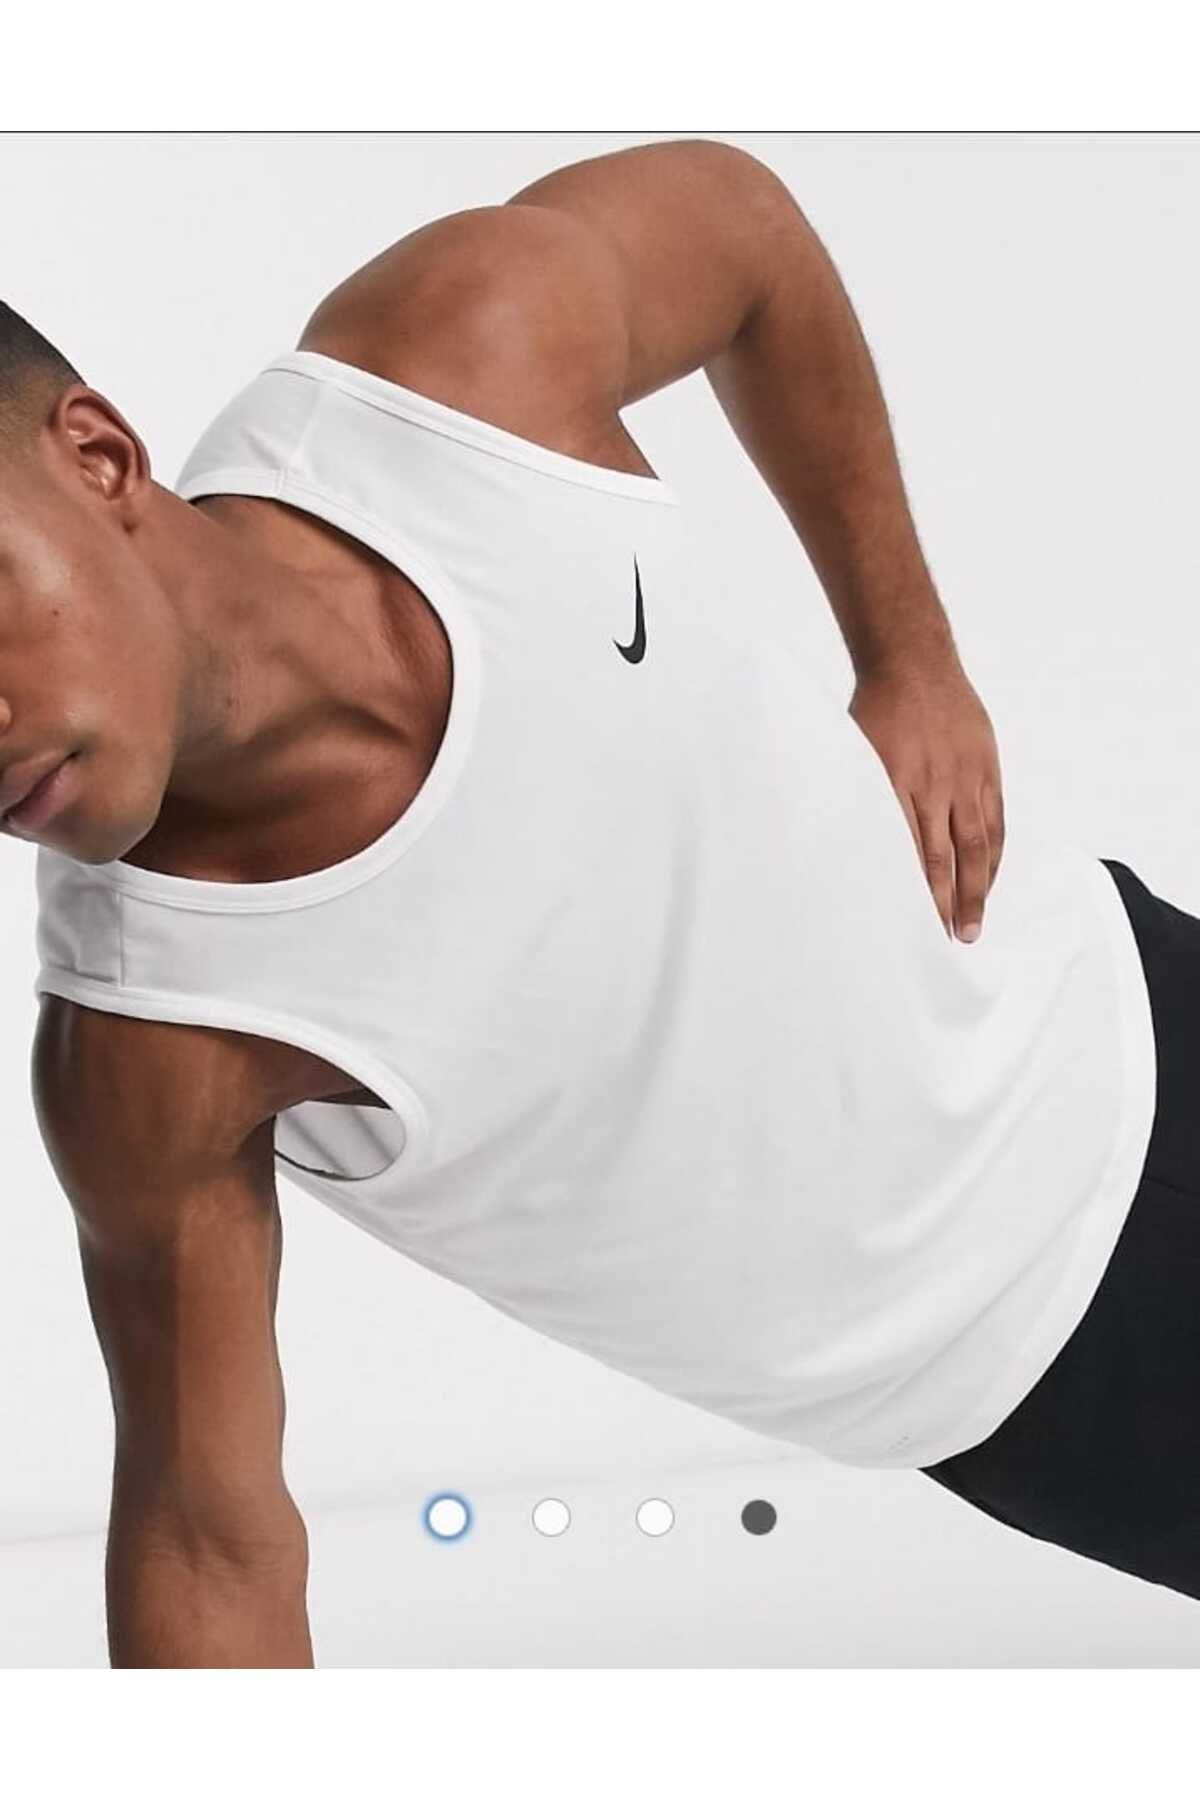 Nike Dri Fit Hyverse Traning Erkek Spor Atleti CNG-STORE®